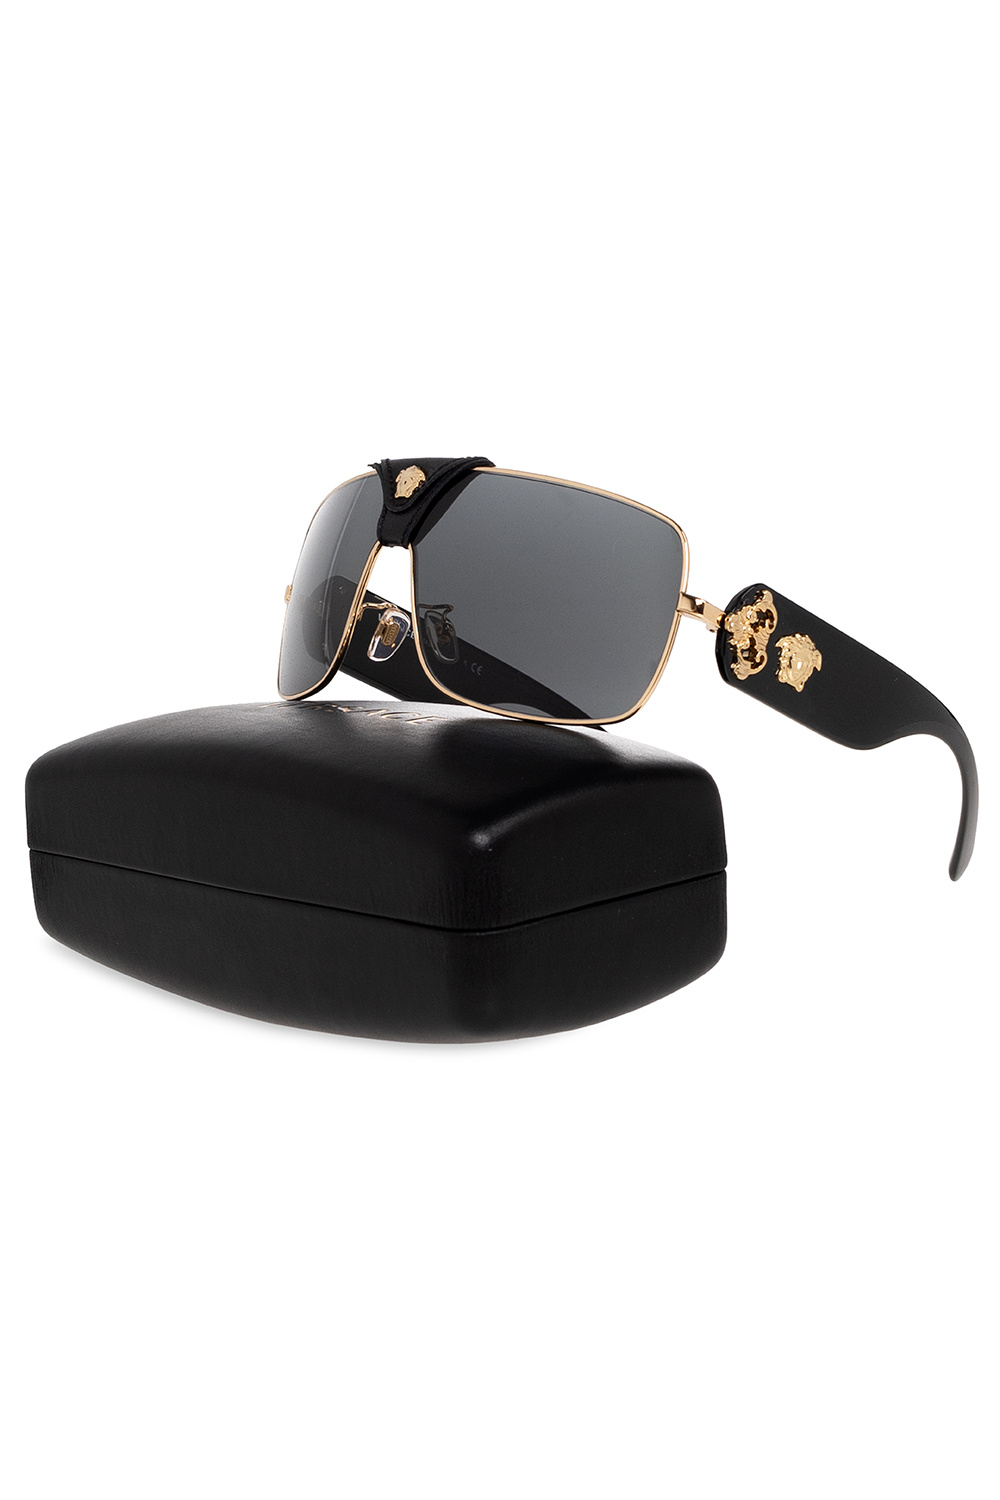 Versace Sunglasses 0326S 003